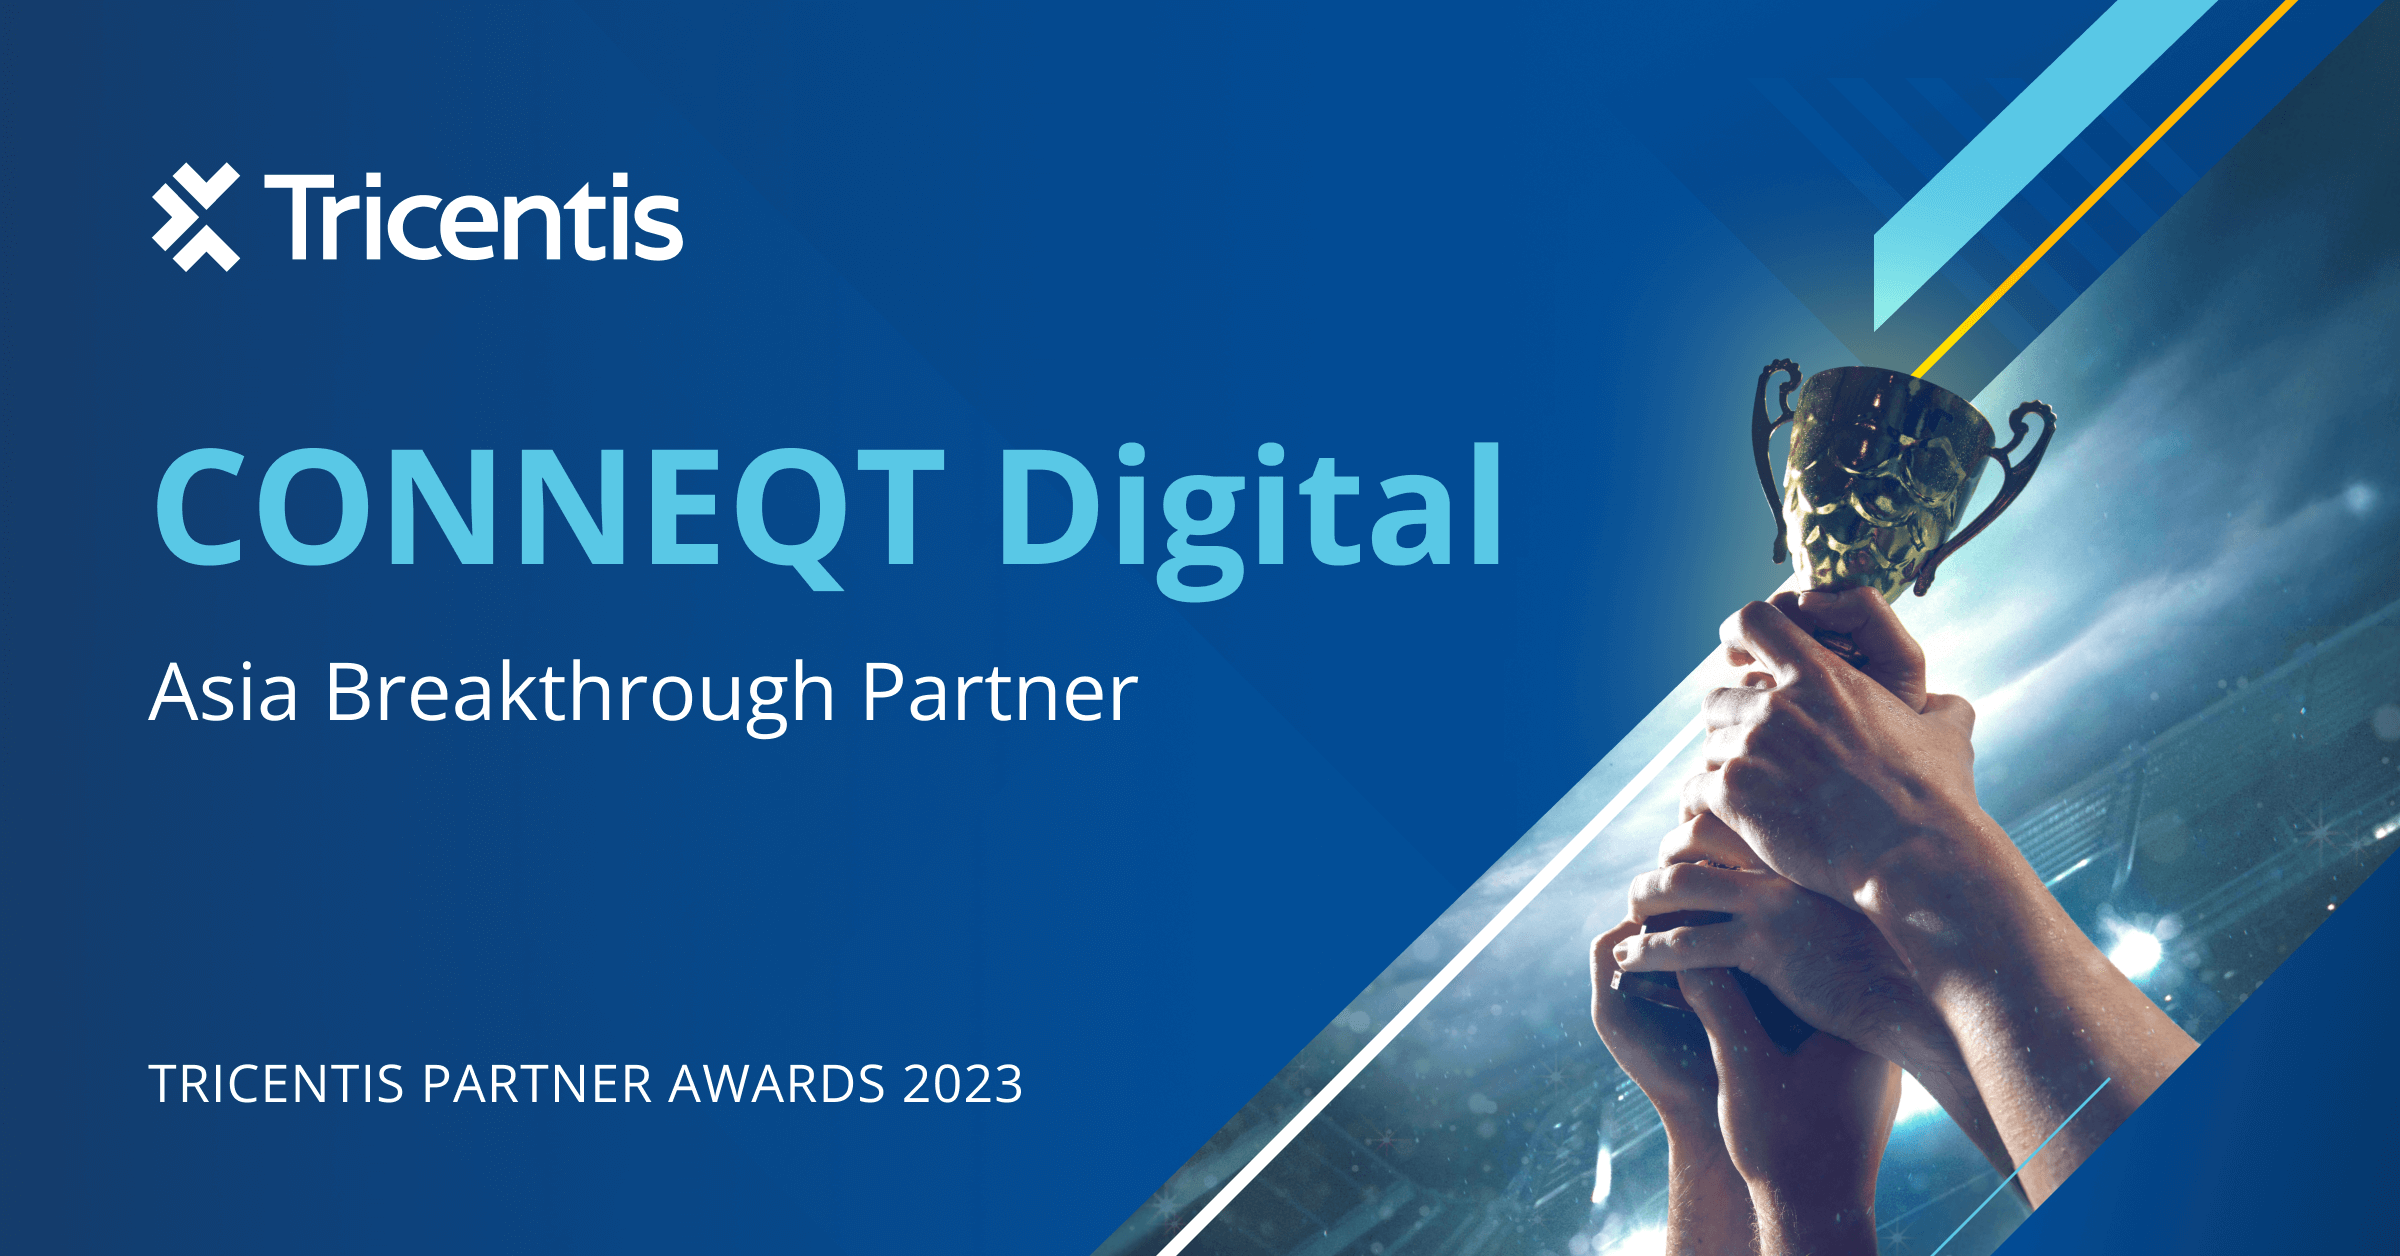 As Yet Conneqt Digital - Your Breakthrough Partner